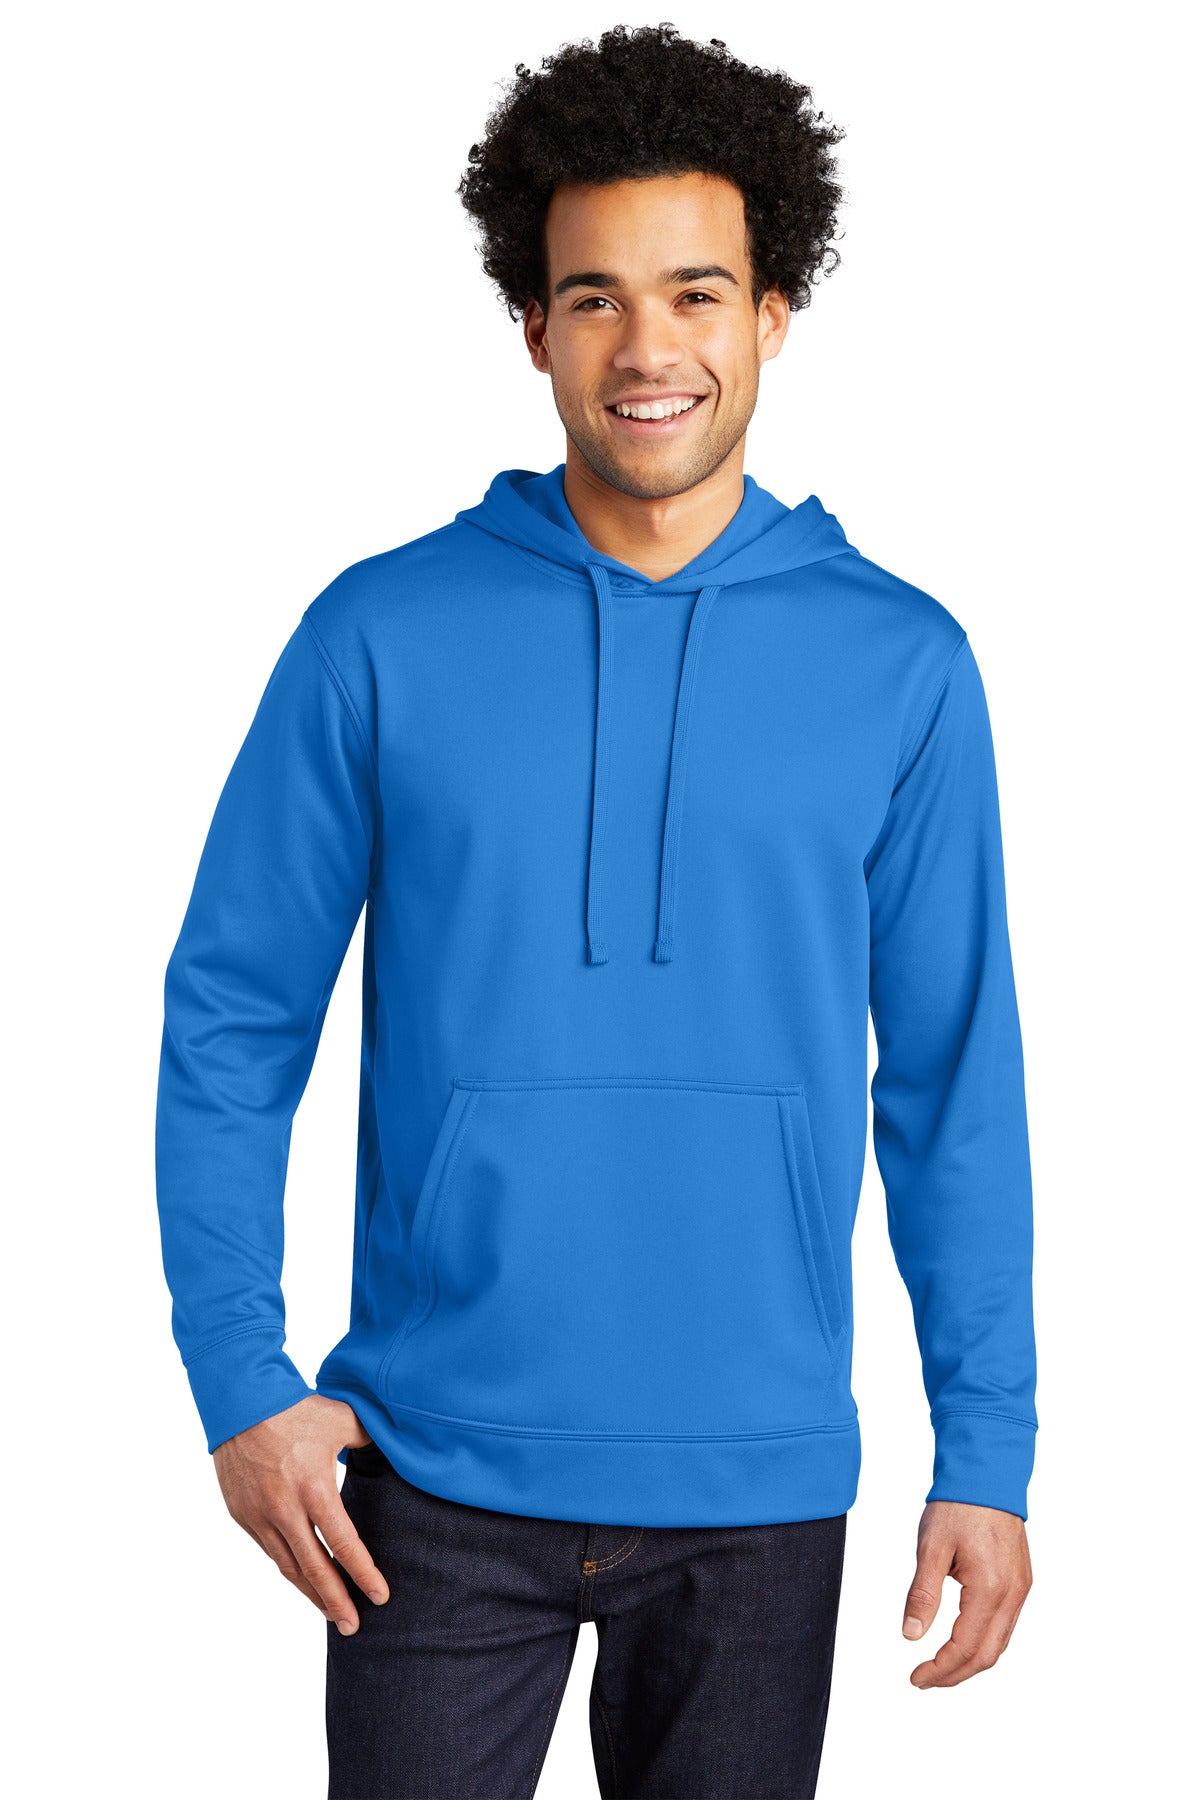 Photo of Port & Company Sweatshirts/Fleece PC590H  color  Royal